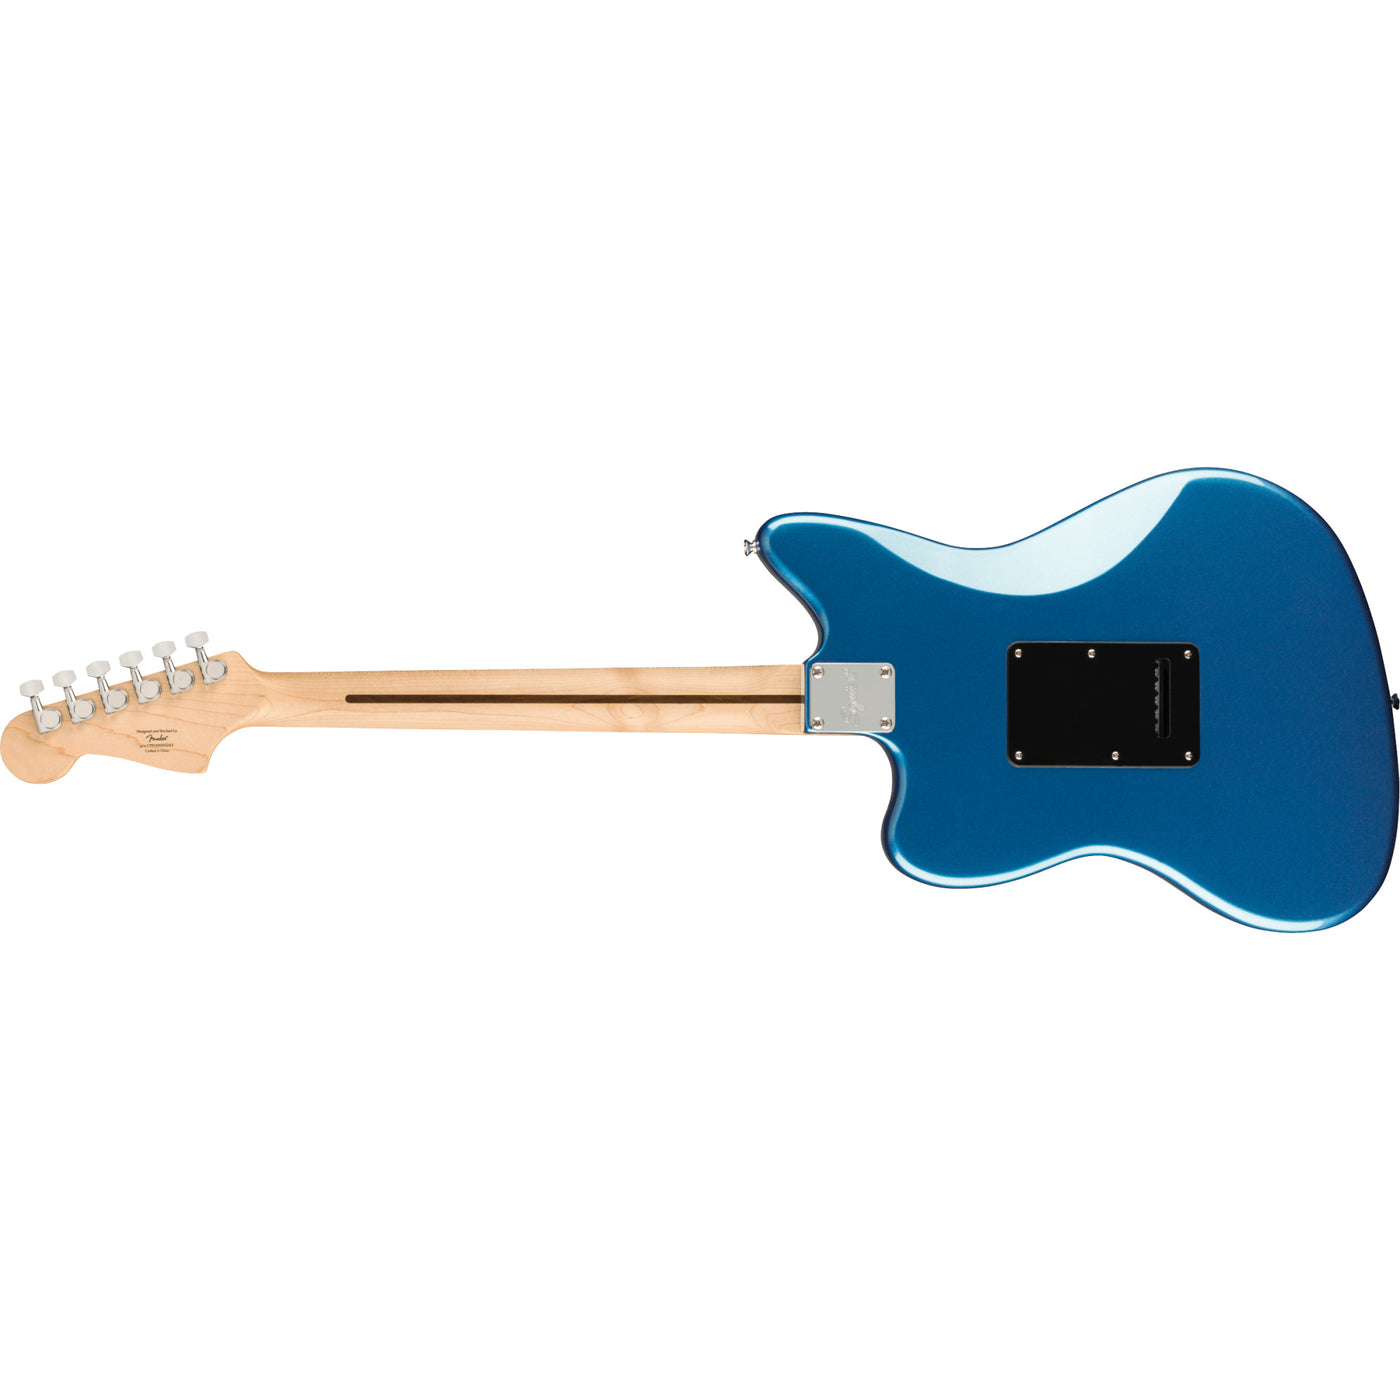 Fender Affinity Series Jazzmaster Electric Guitar, Lake Placid Blue (0378301502)